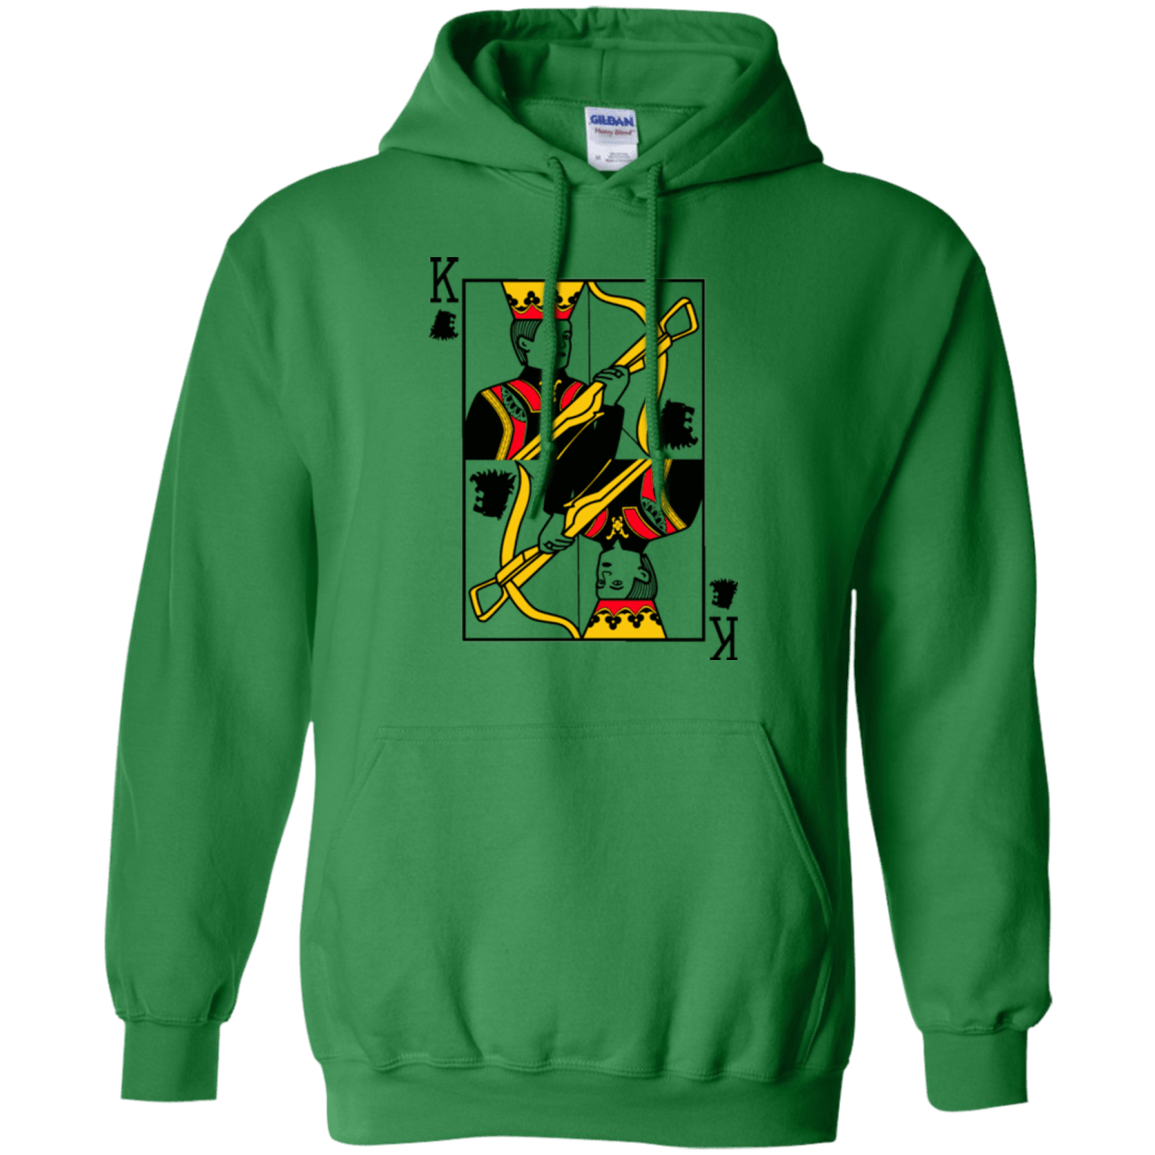 Sweatshirts Irish Green / Small King Joffrey Pullover Hoodie